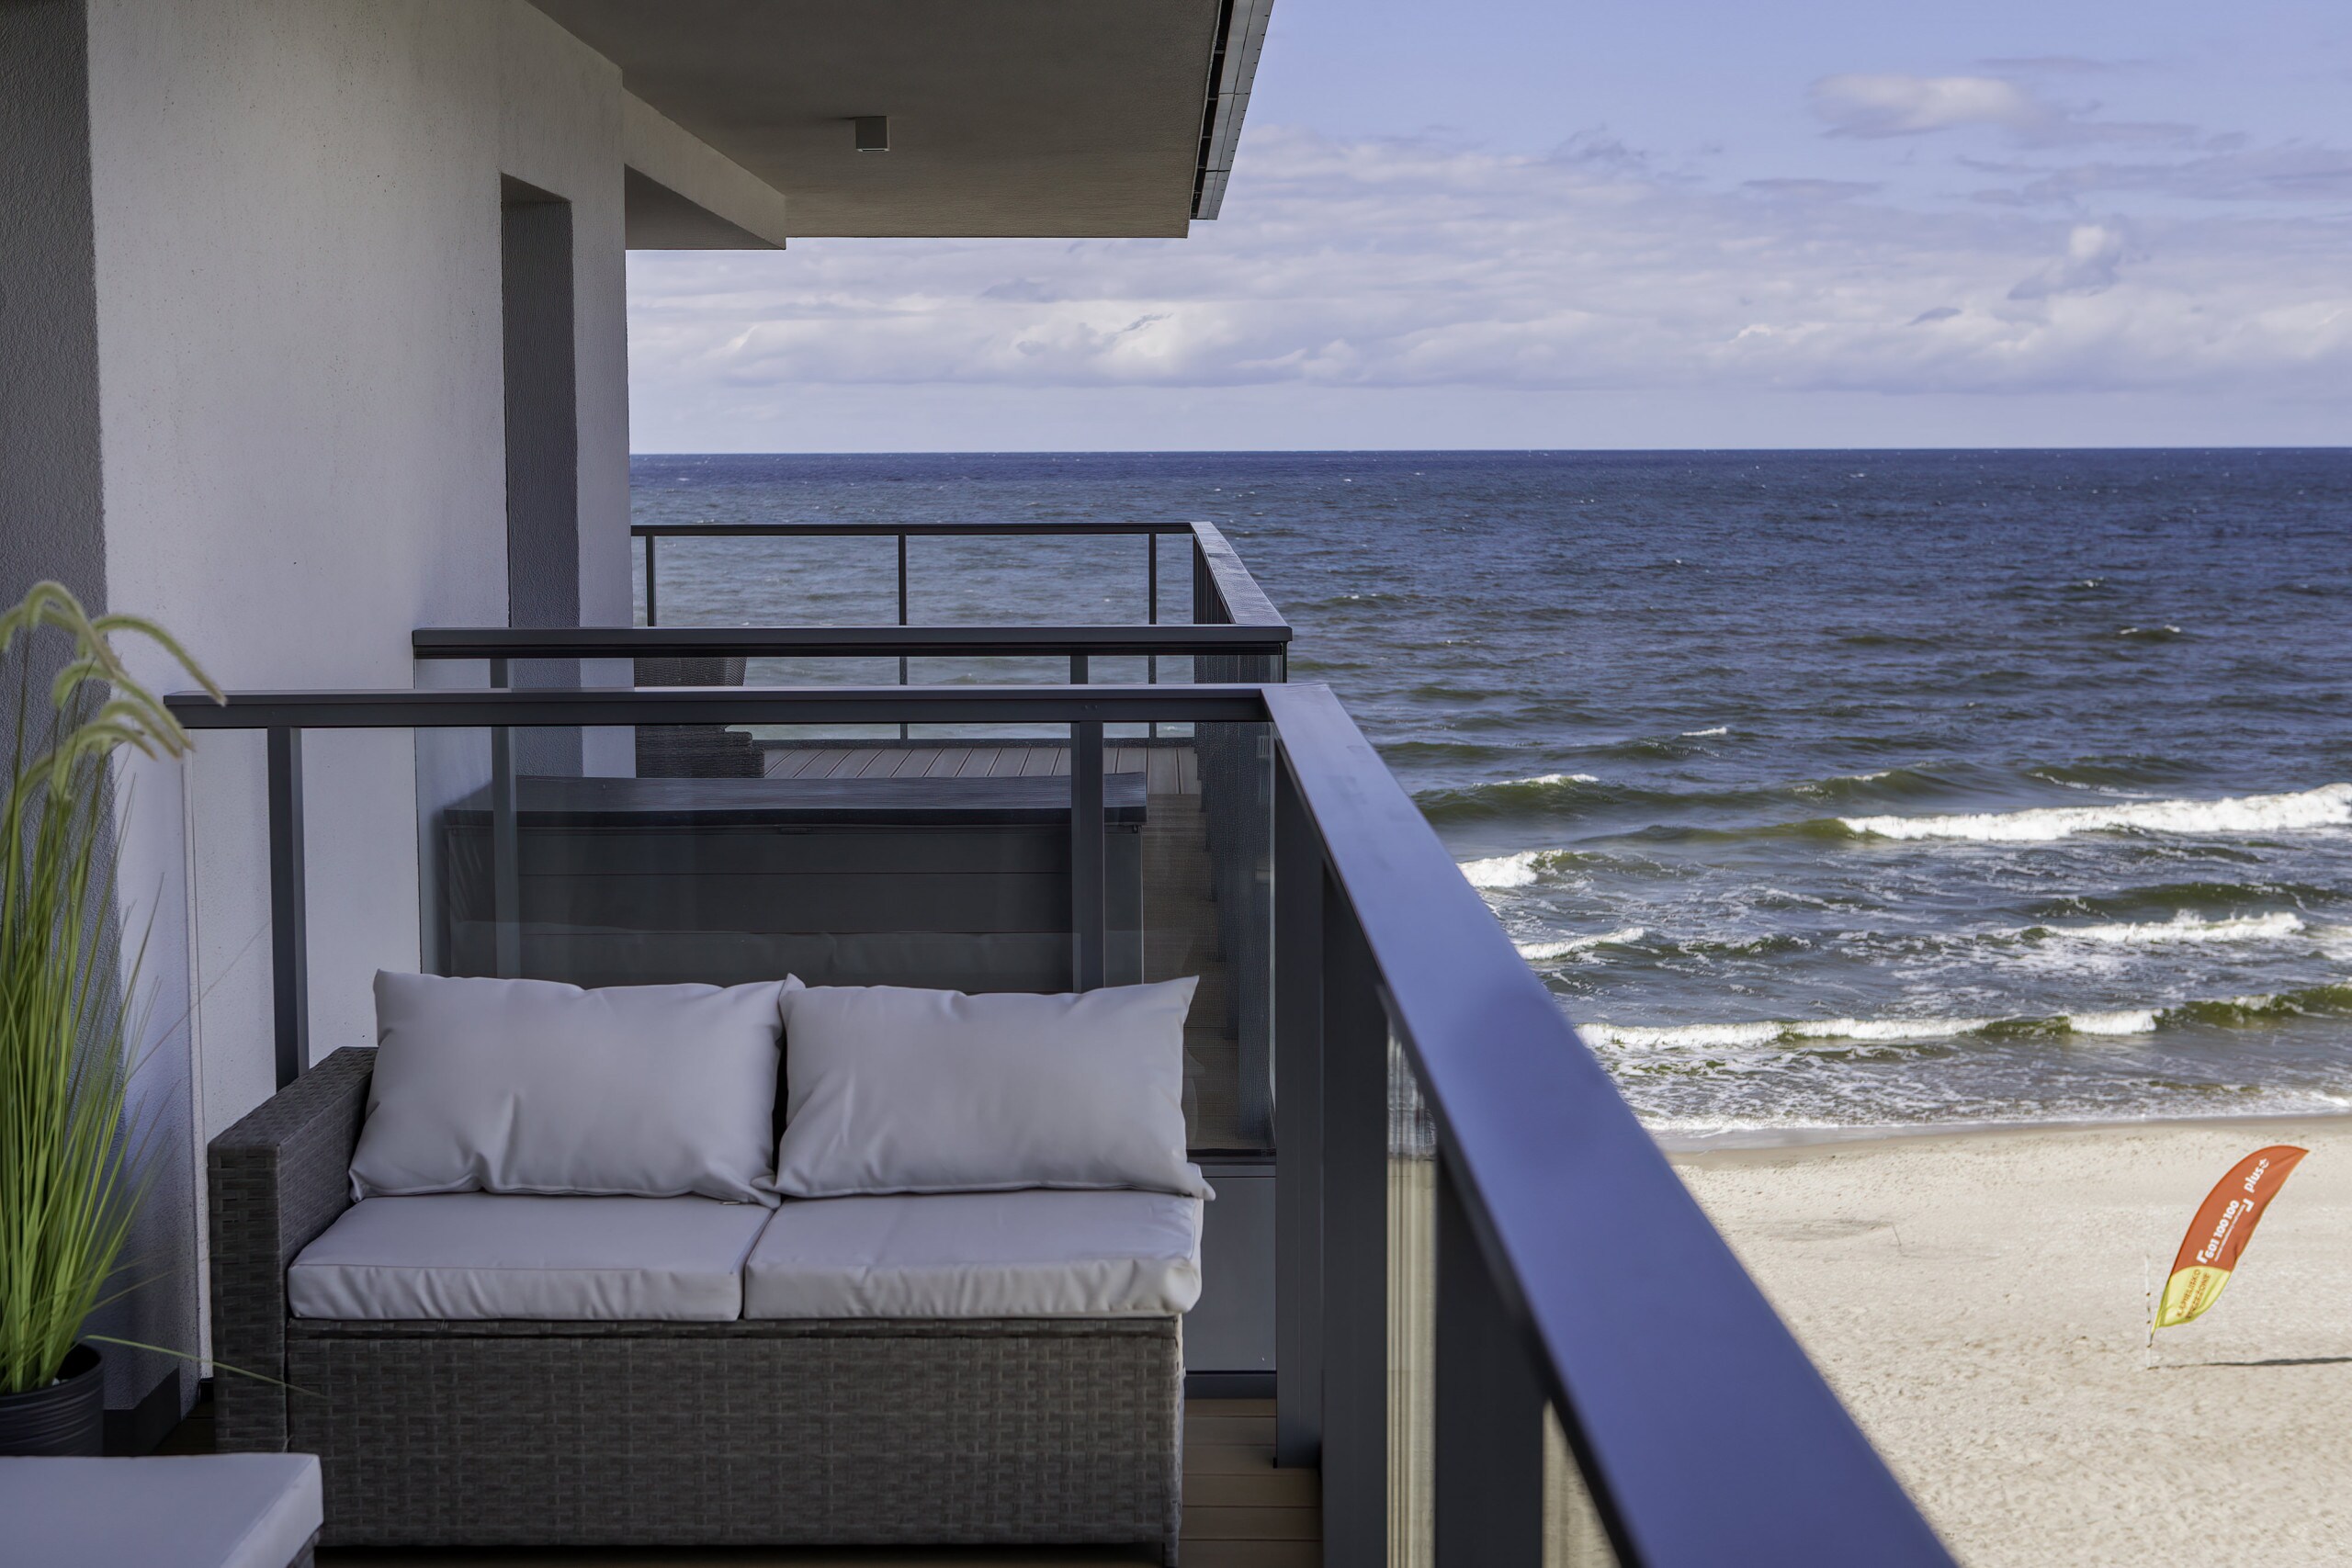 Balcony of Gardenia Seaside Royallux 2 apartment with seaview